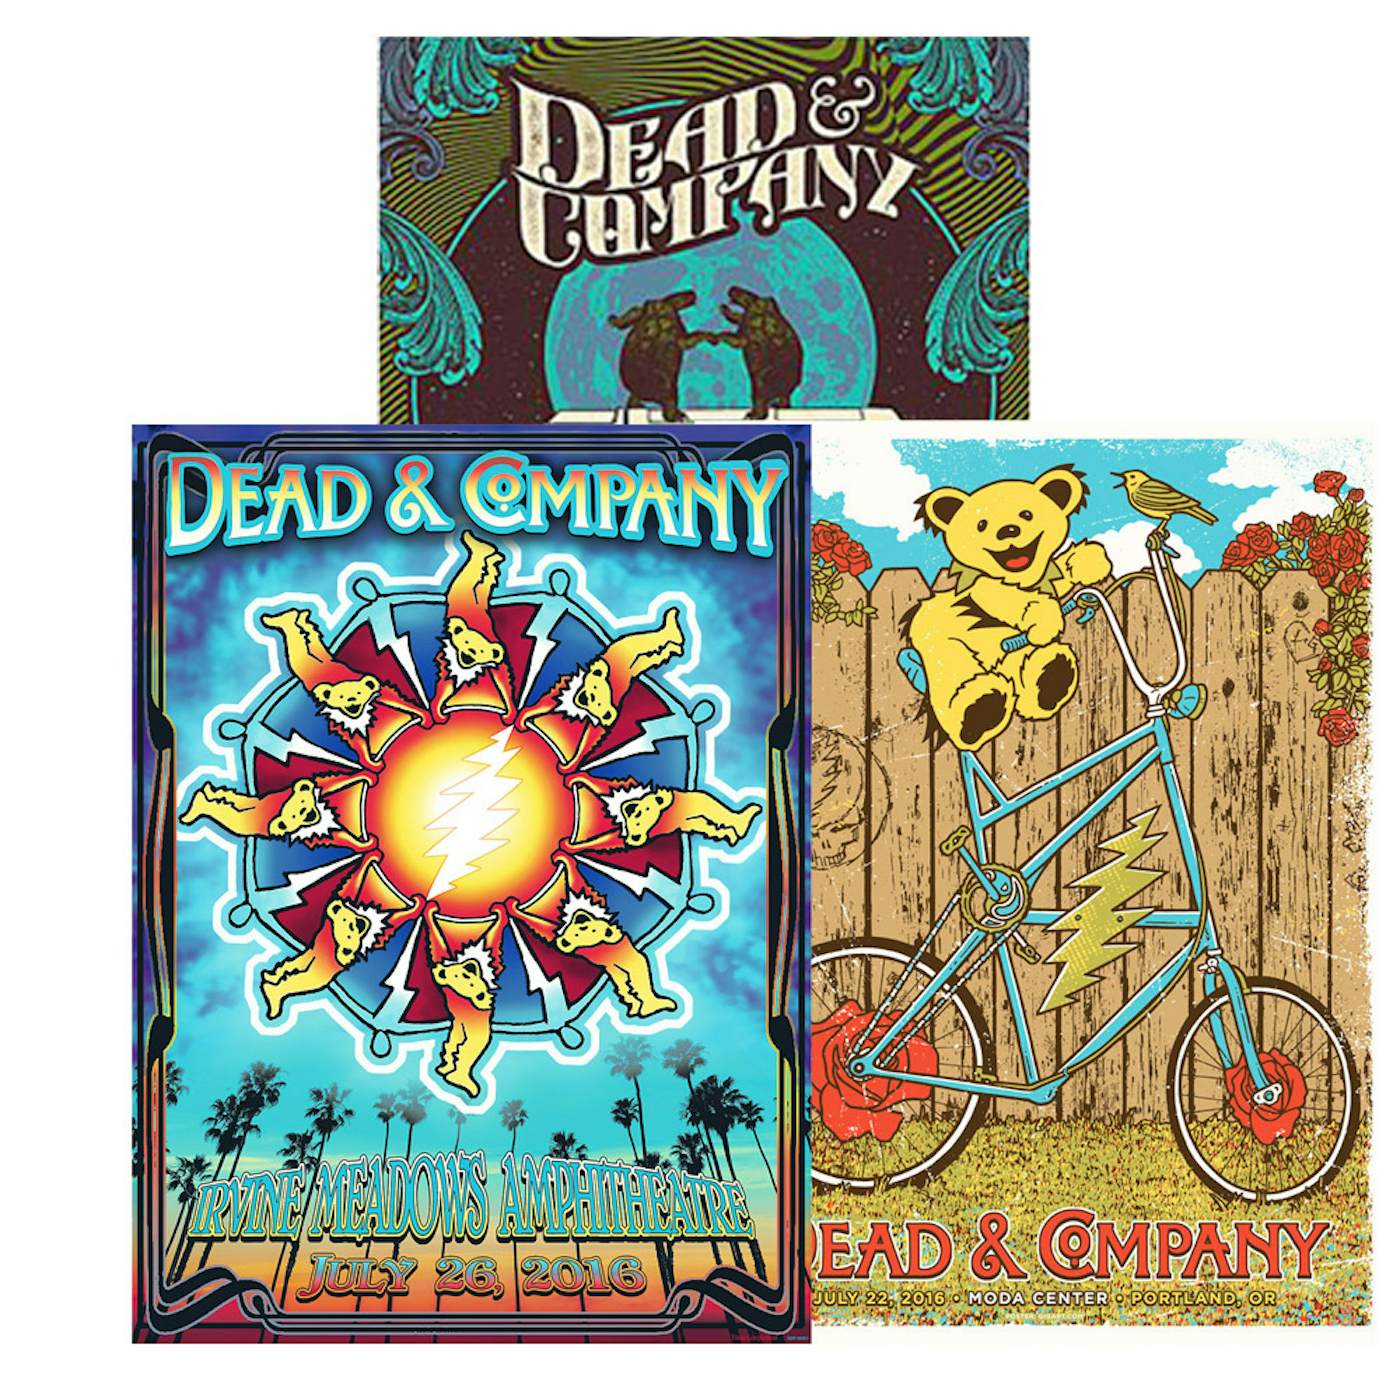 Dead & Company Exclusive Event Posters Bundle!